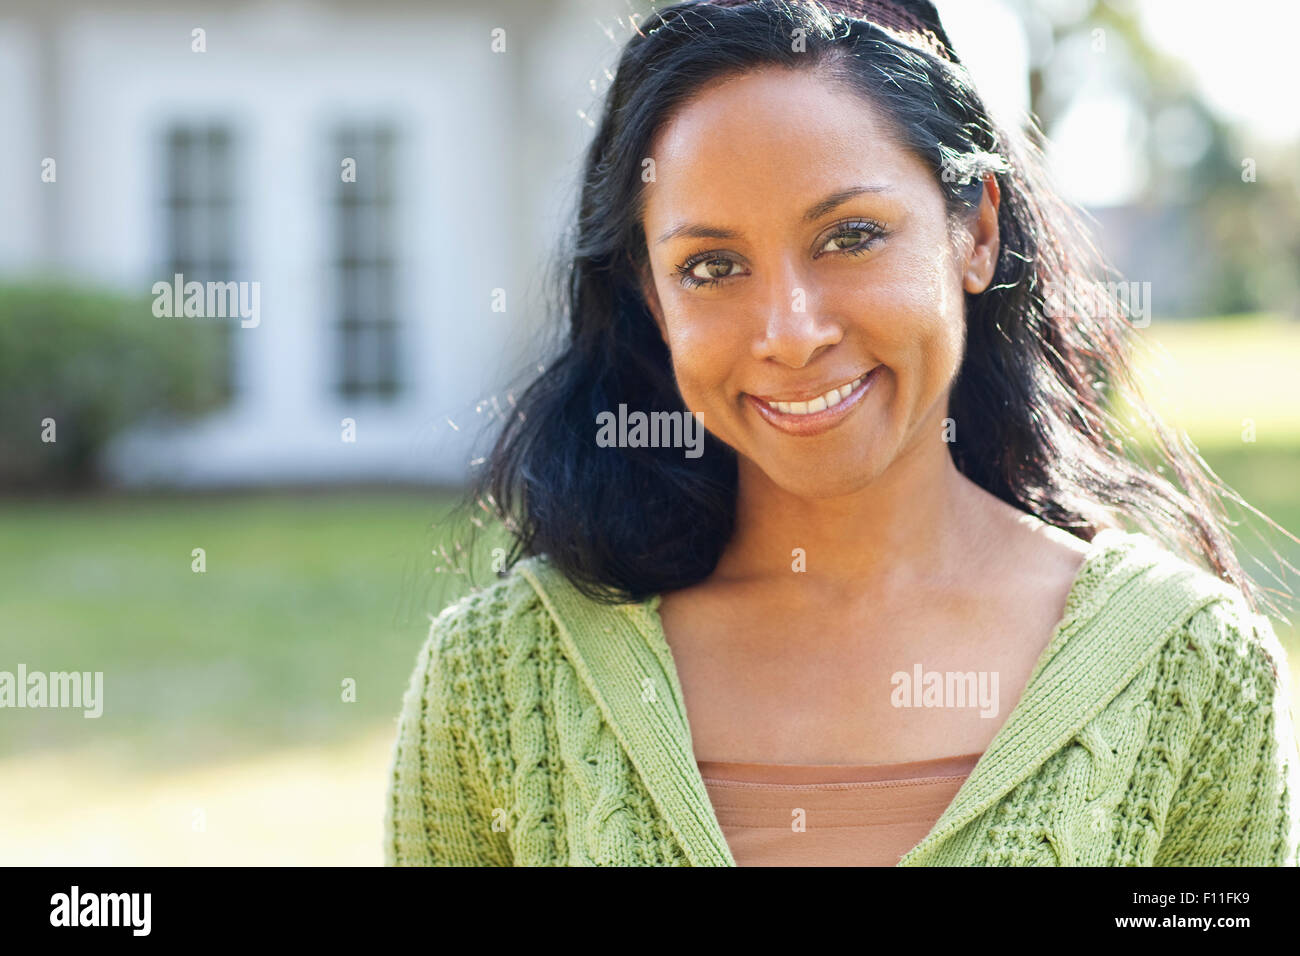 Indian woman smiling in backyard Stock Photo